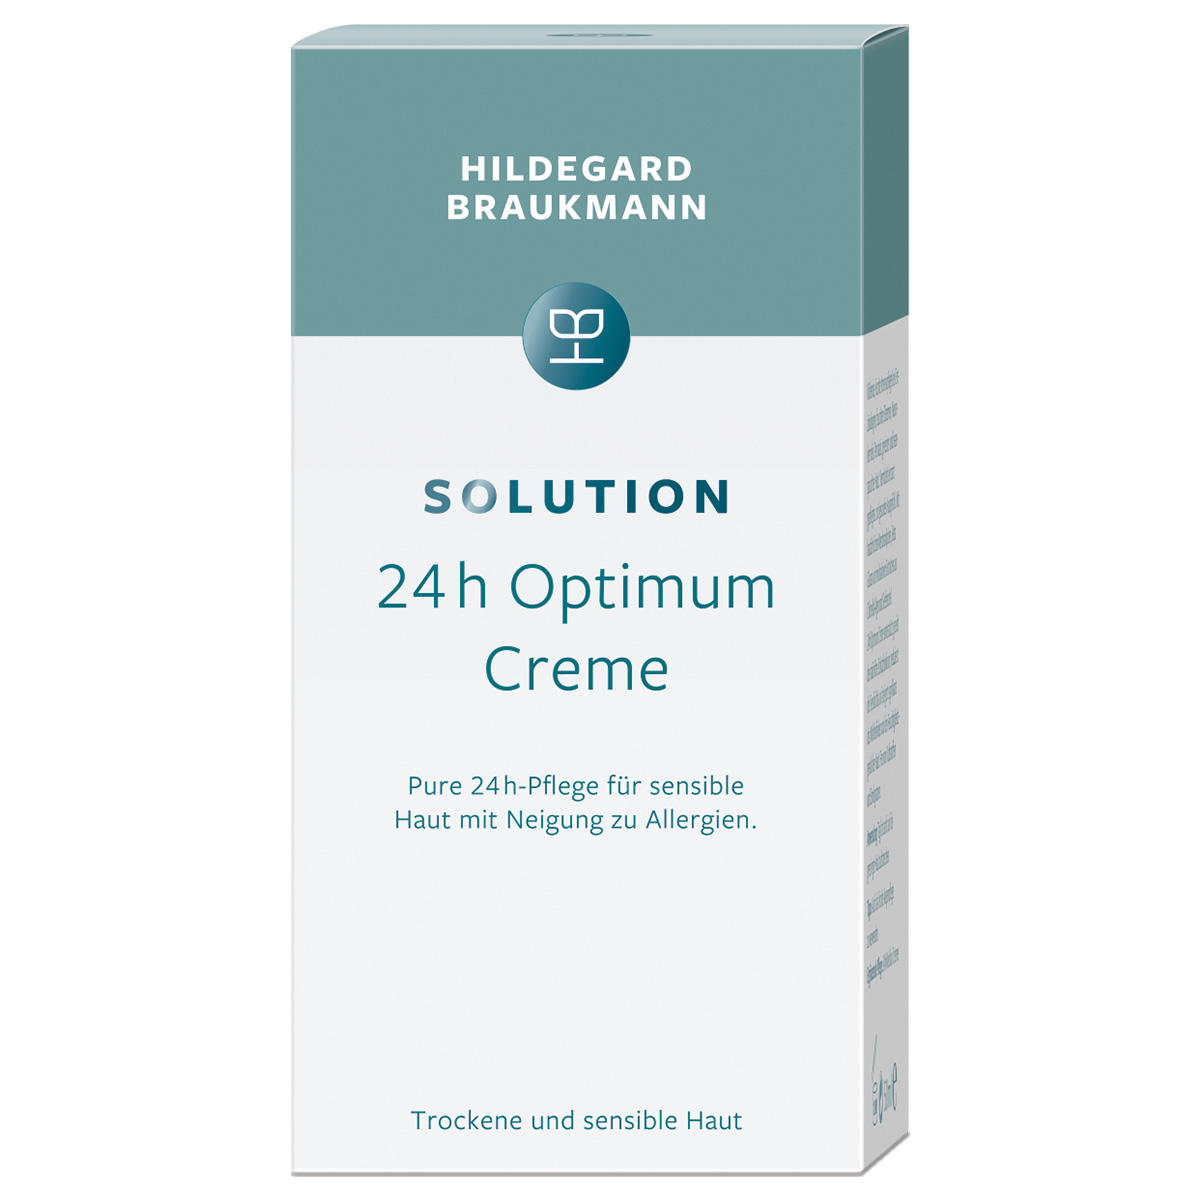 Hildegard Braukmann SOLUTION 24h Optimum Creme 50 ml - 2